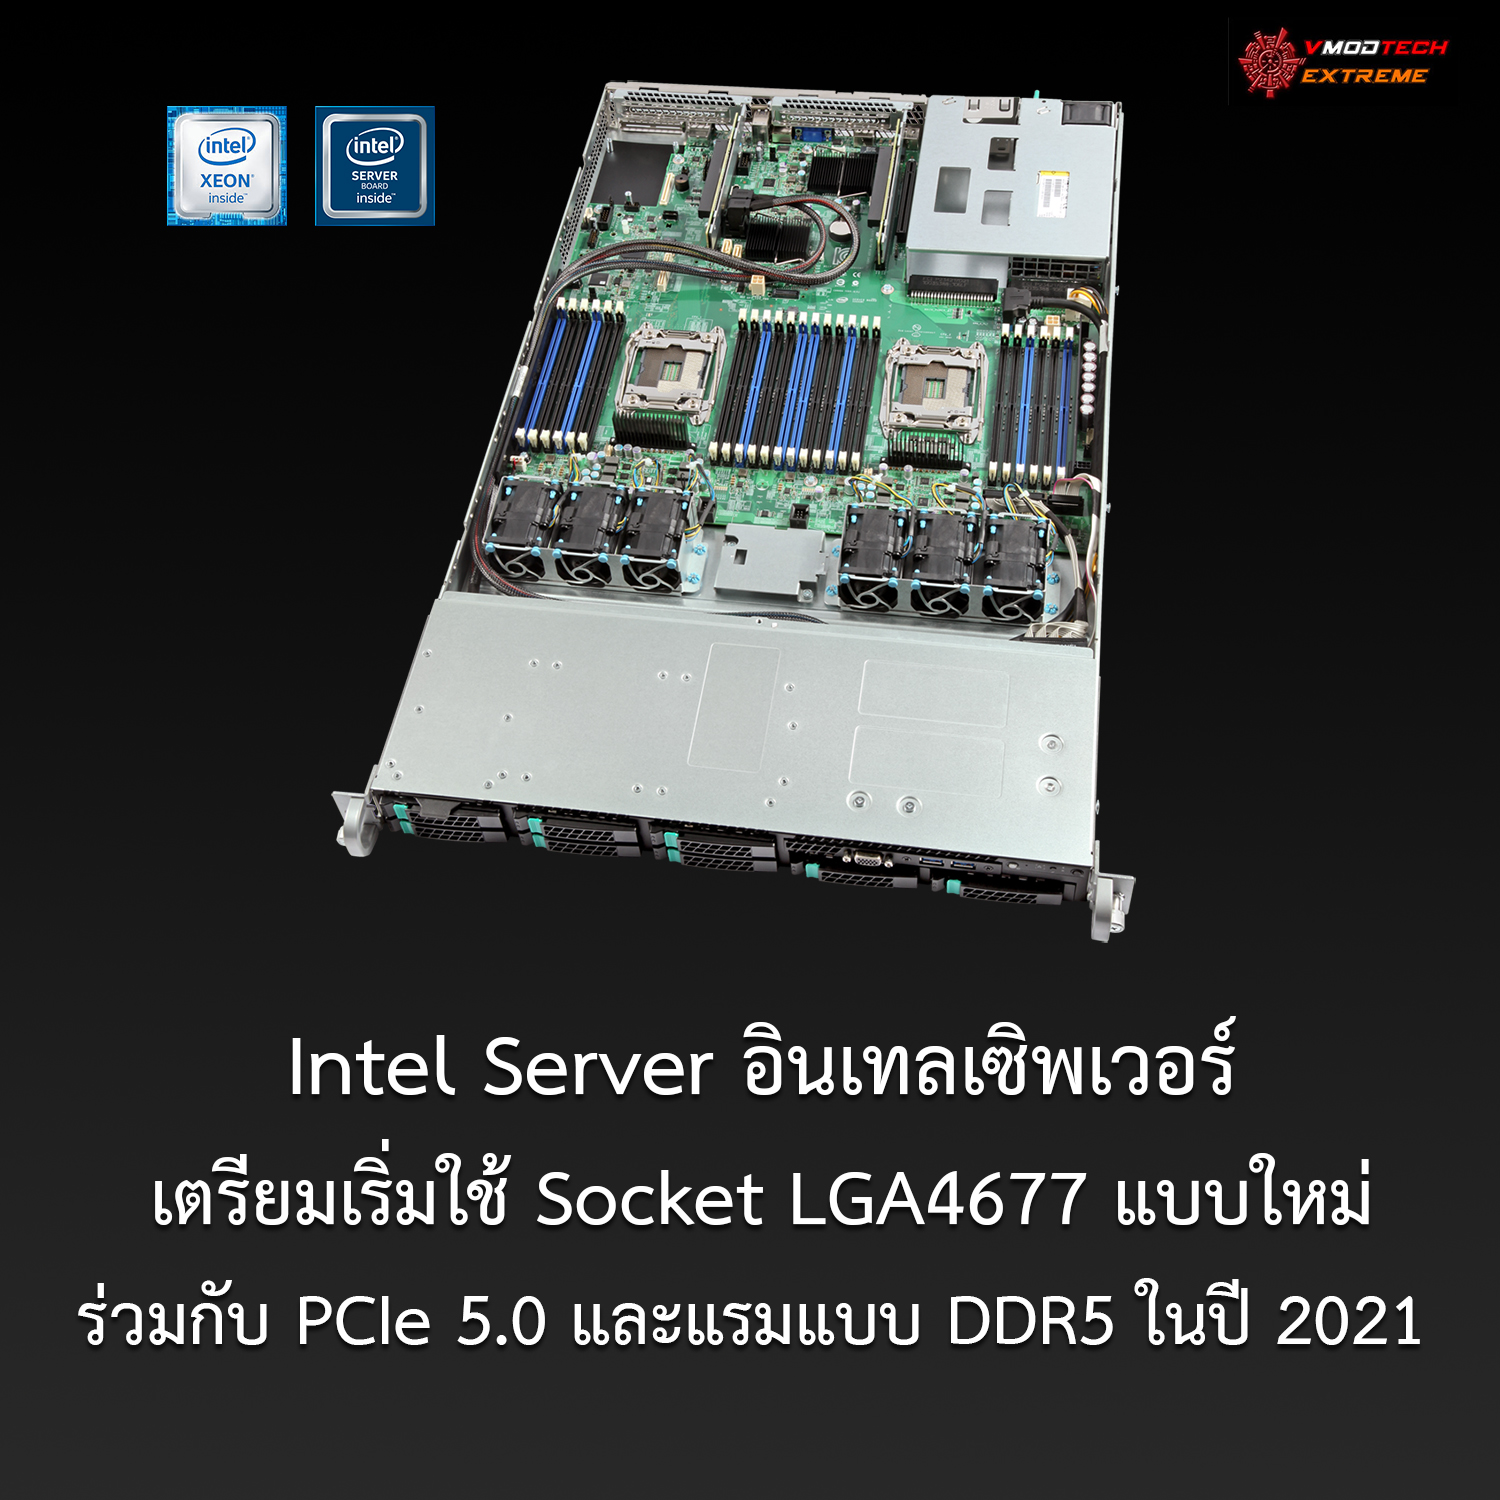 intel server 20211 Intel Server อินเทลเซิพเวอร์เตรียมเริ่มใช้ Socket LGA4677 แบบใหม่ร่วมกับ PCIe 5.0 และแรมแบบ DDR5 ในปี 2021 